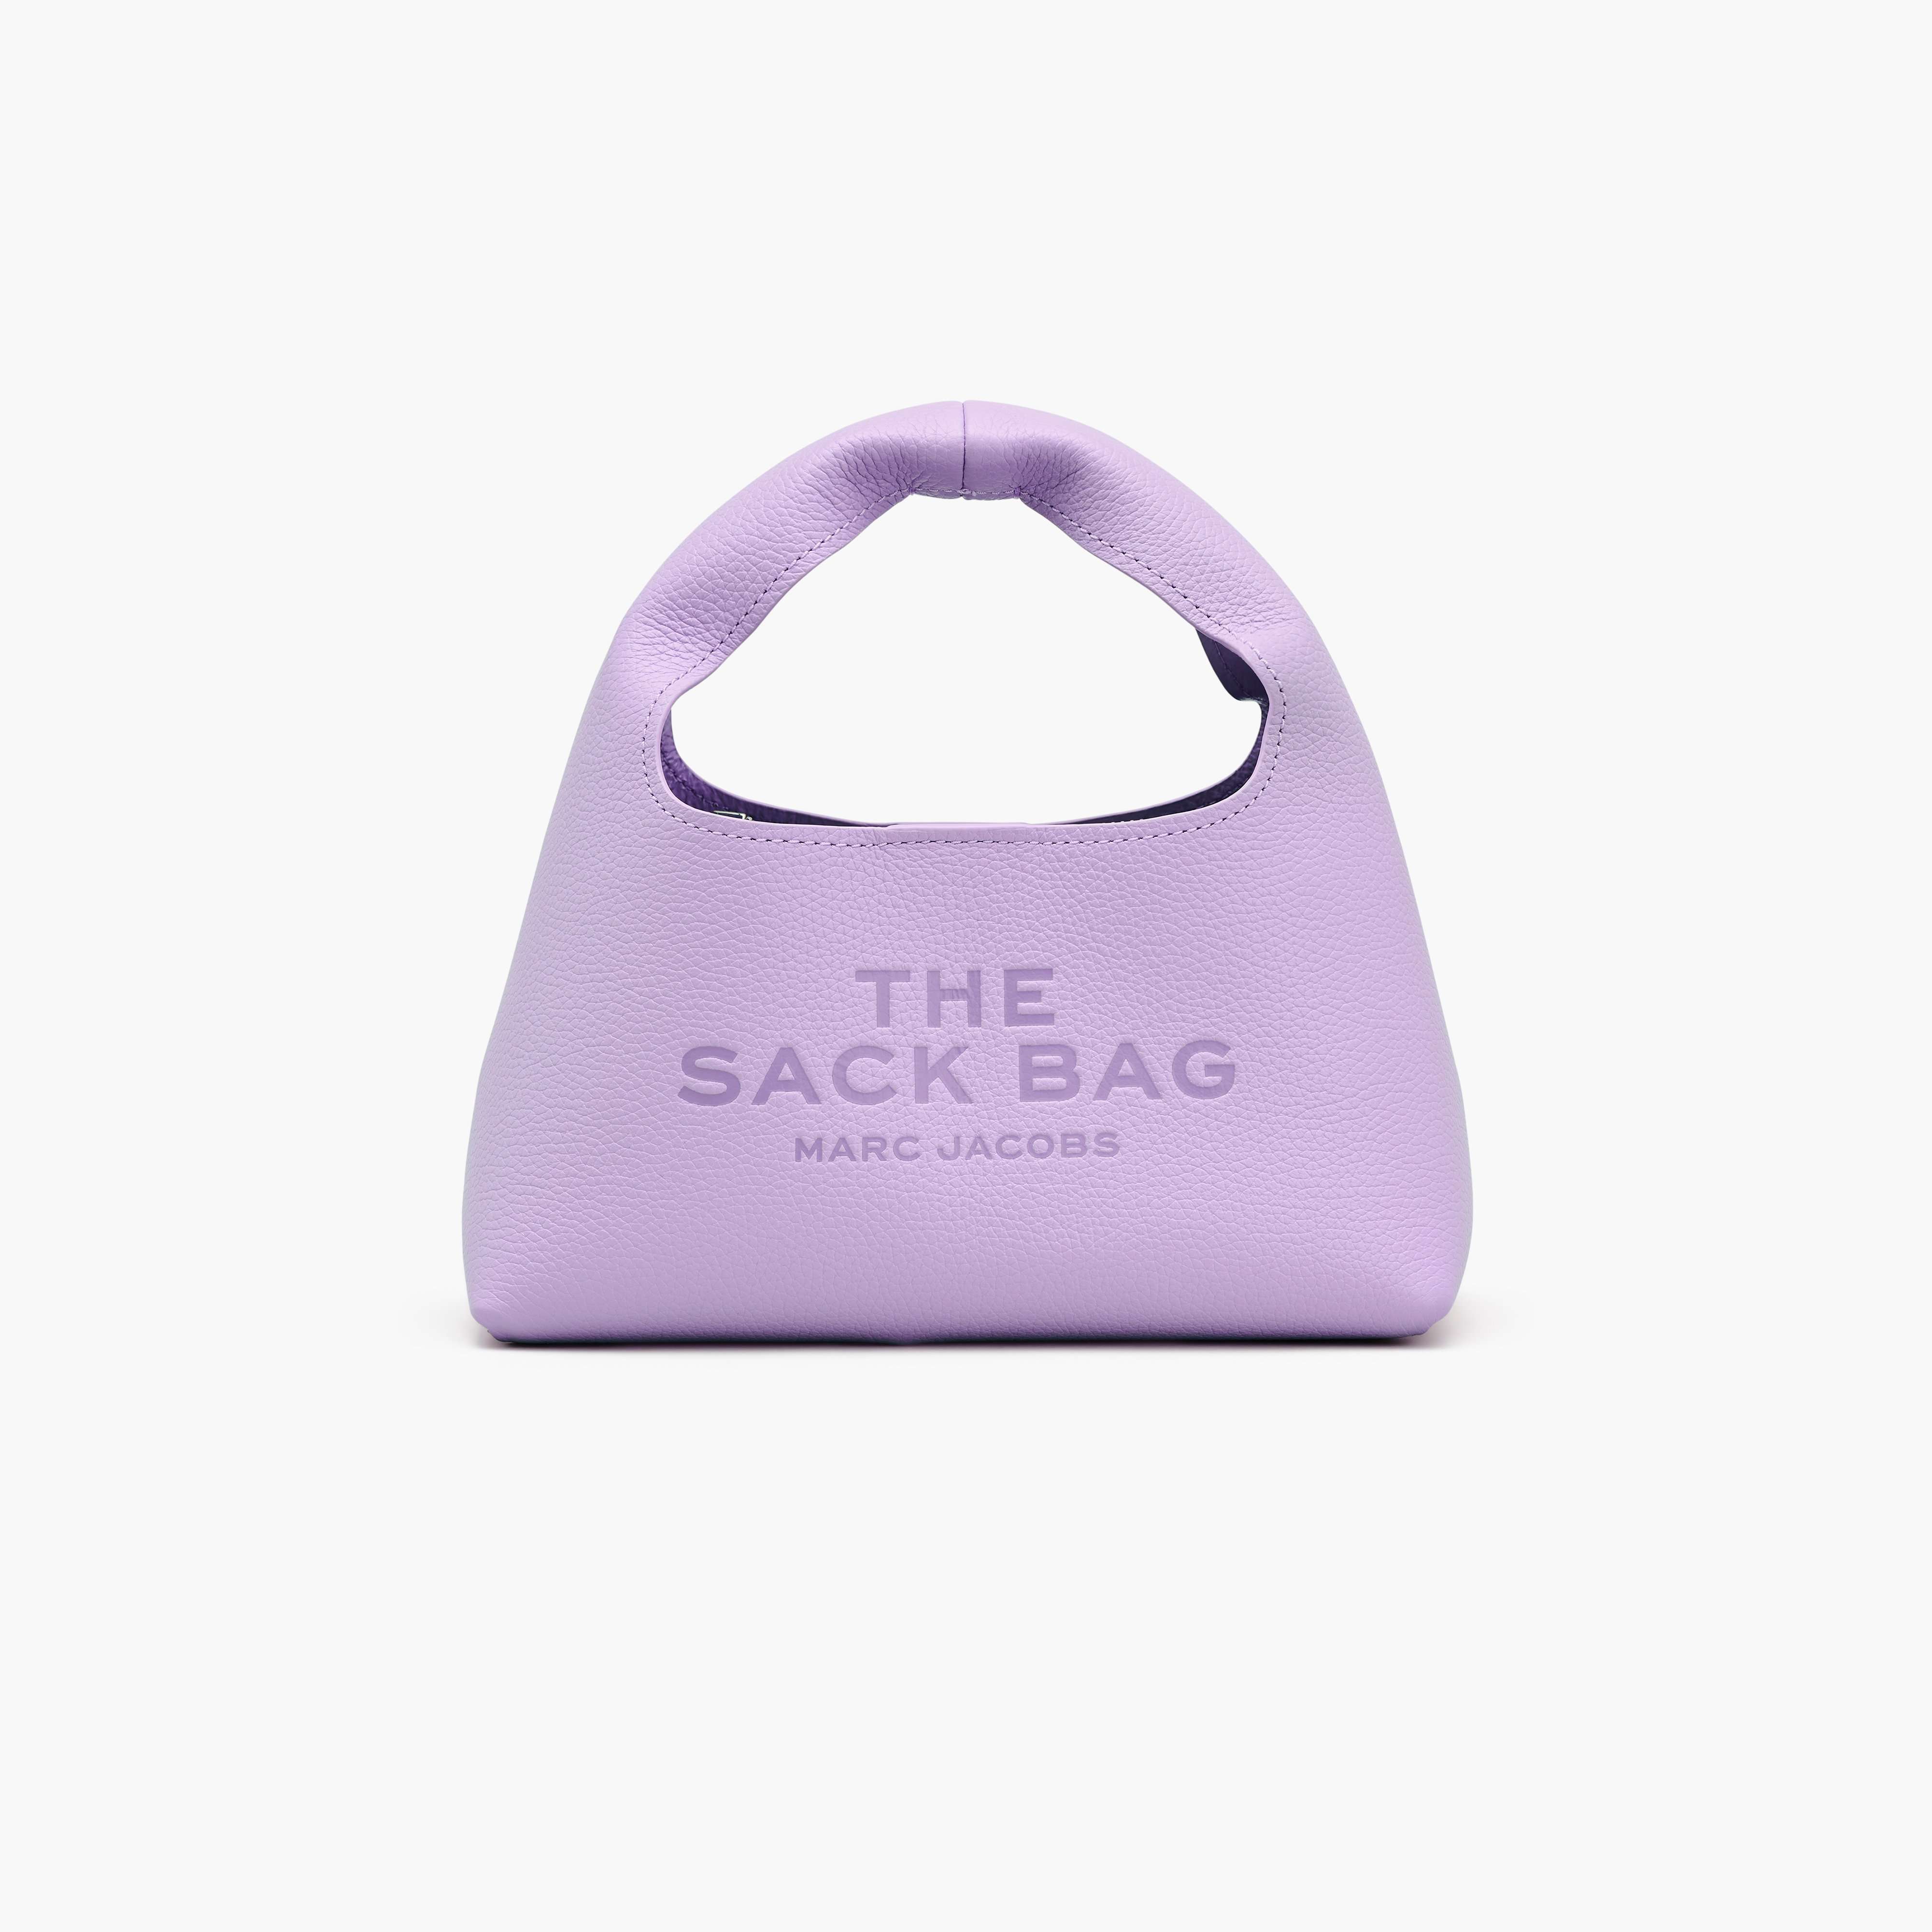 The Mini Sack Bag in Wisteria